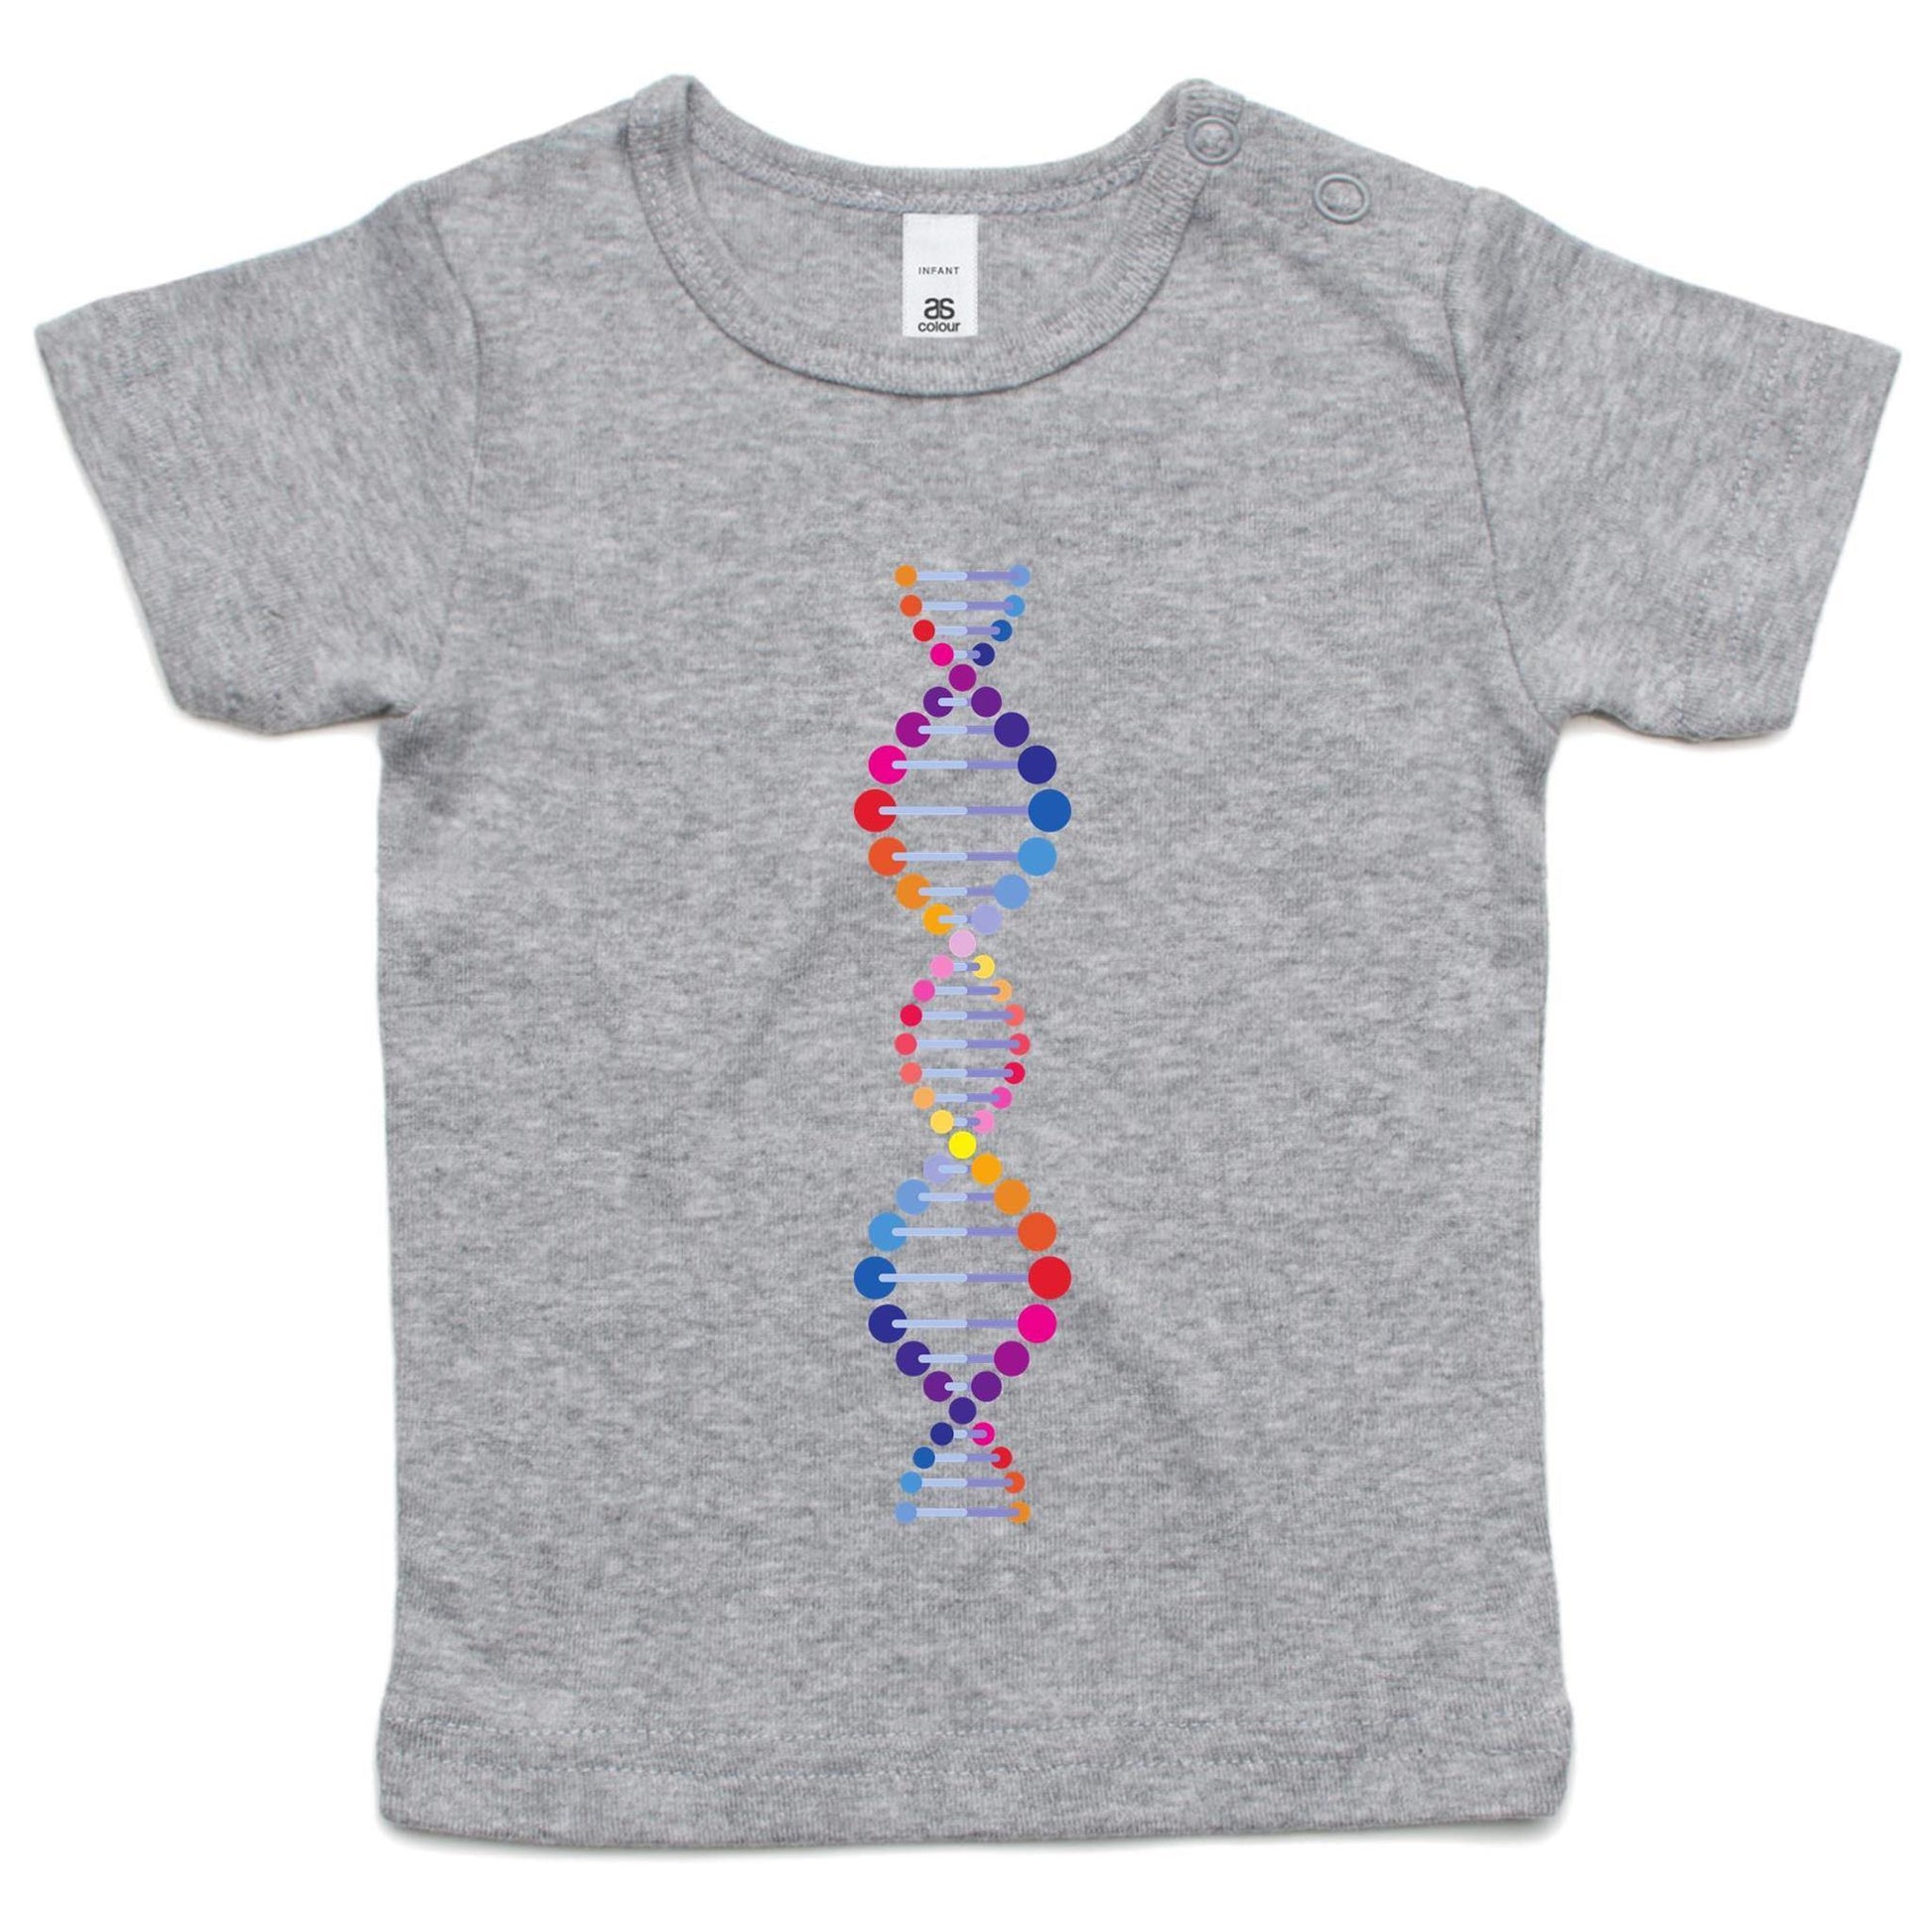 DNA - Baby T-shirt Grey Marle Baby T-shirt kids Science